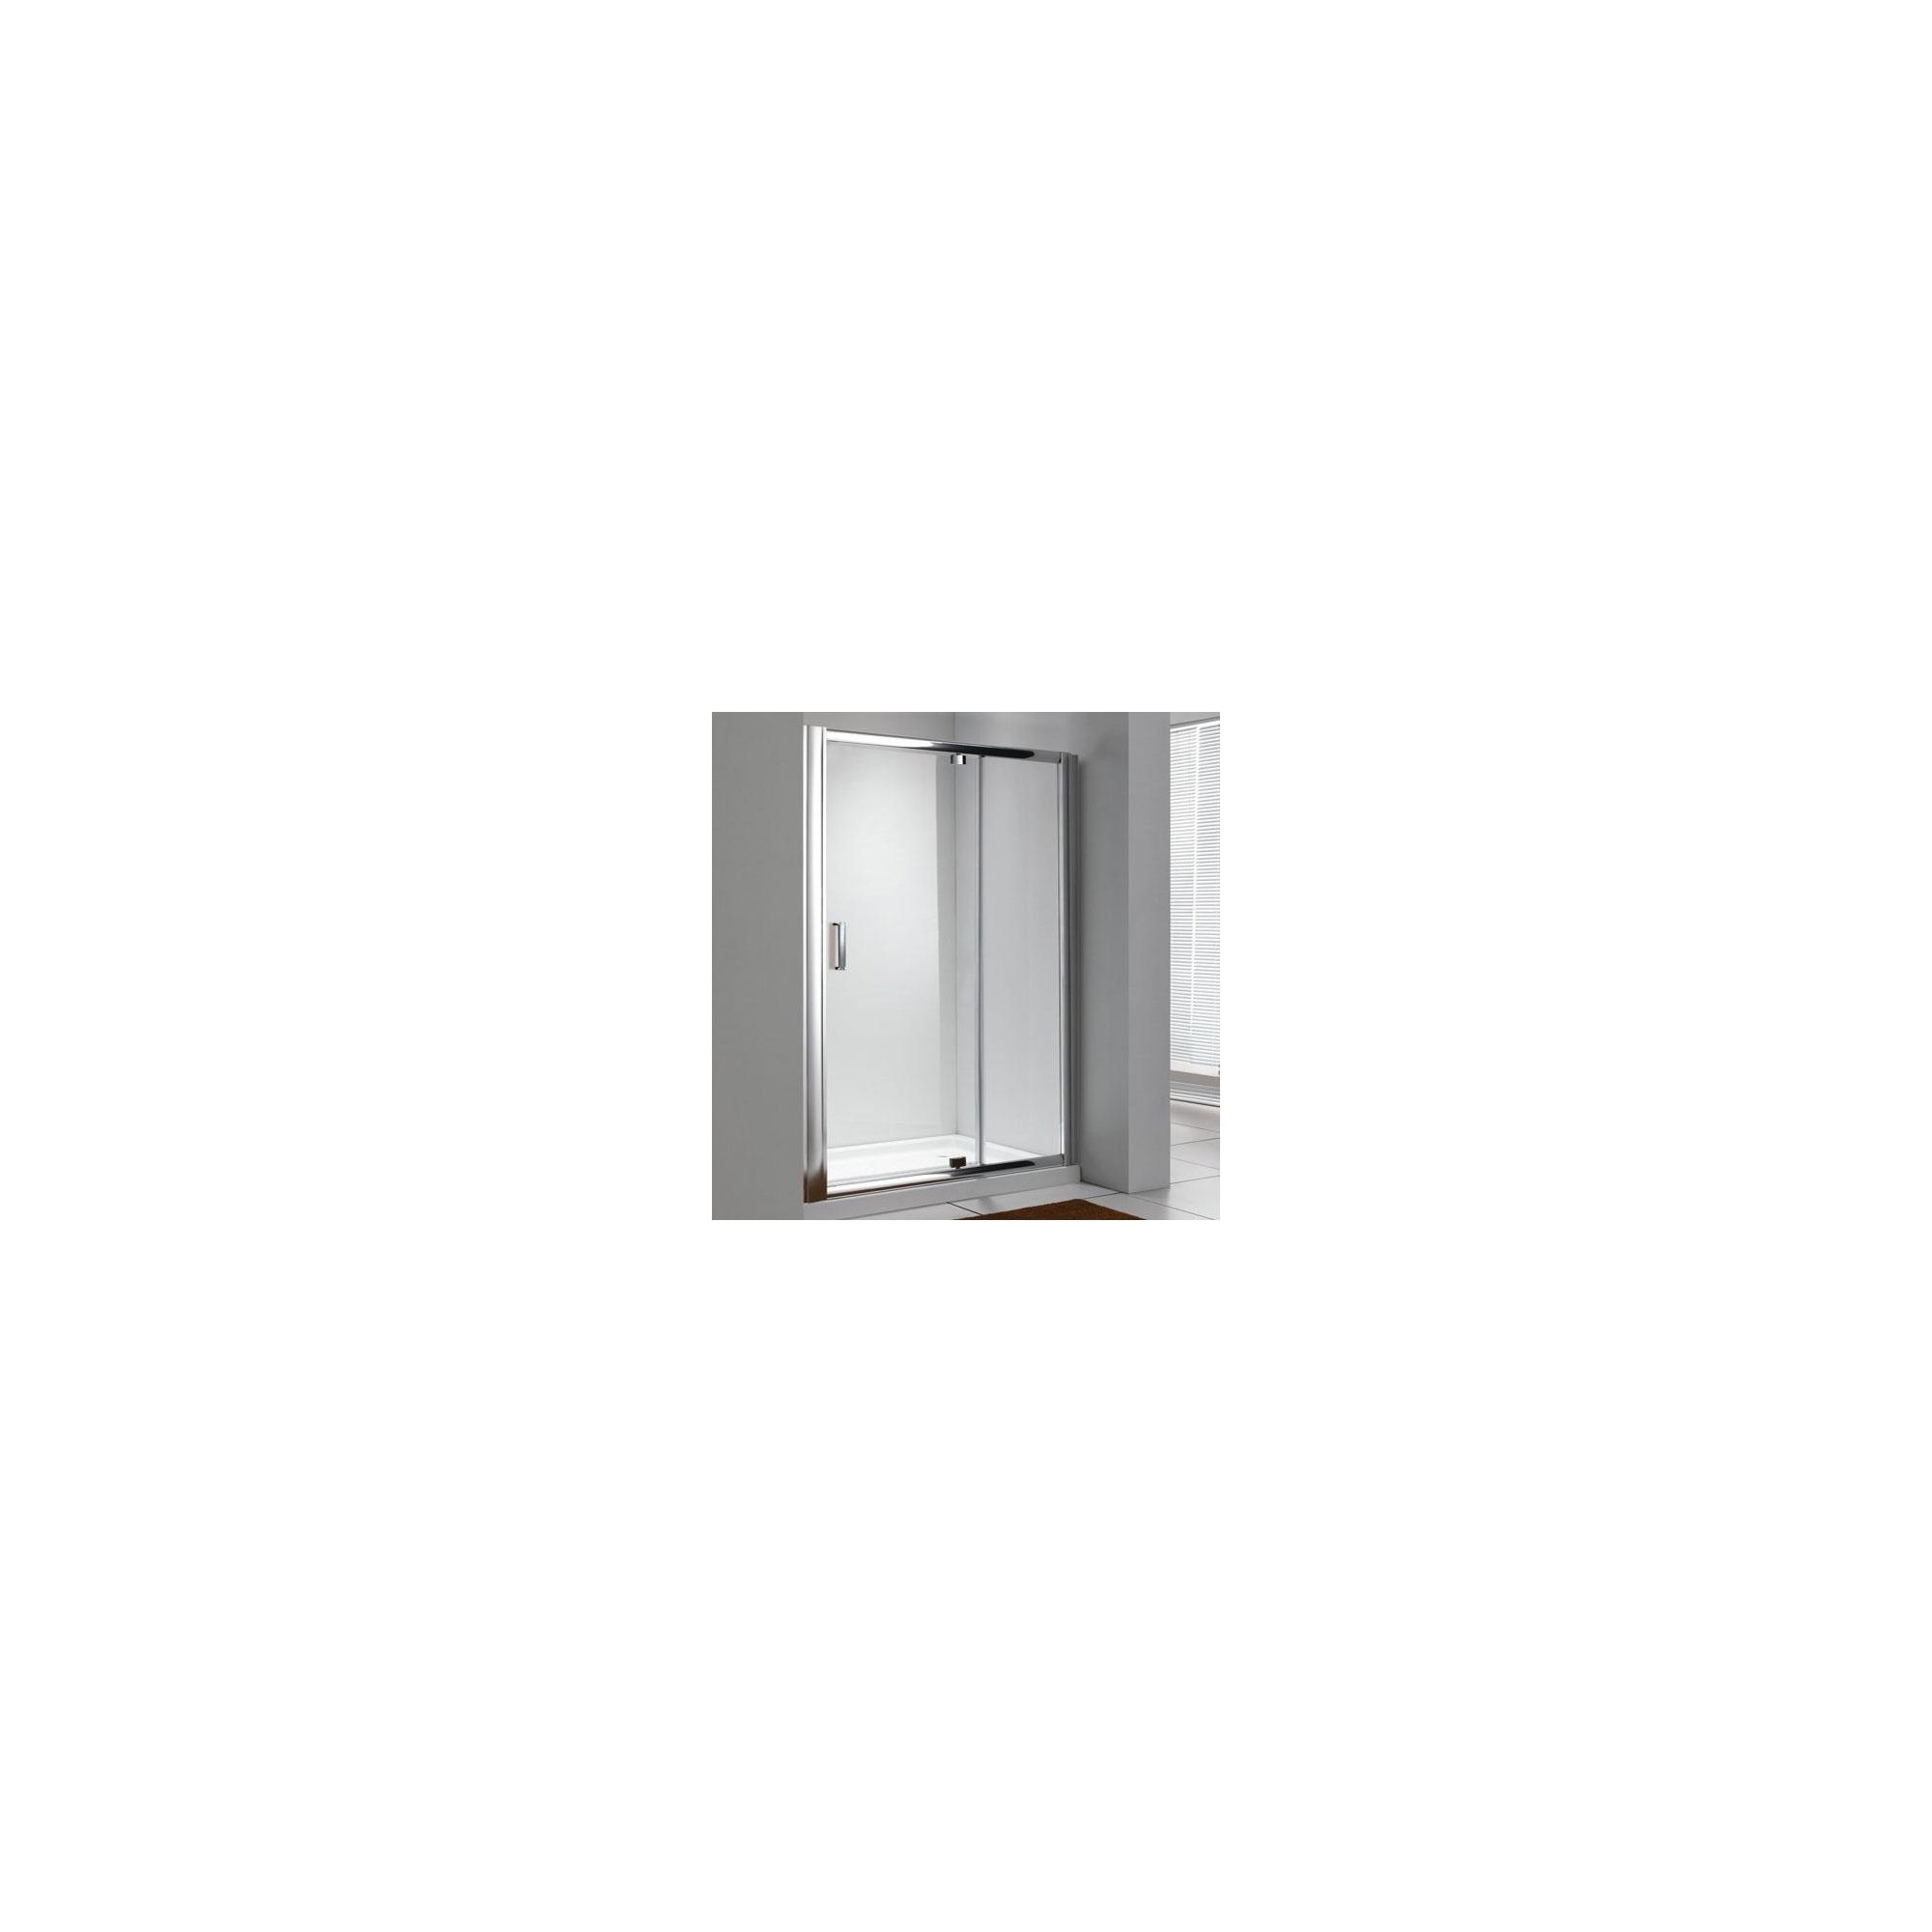 Duchy Style Pivot Shower Door, 1000mm Wide, 6mm Glass at Tesco Direct